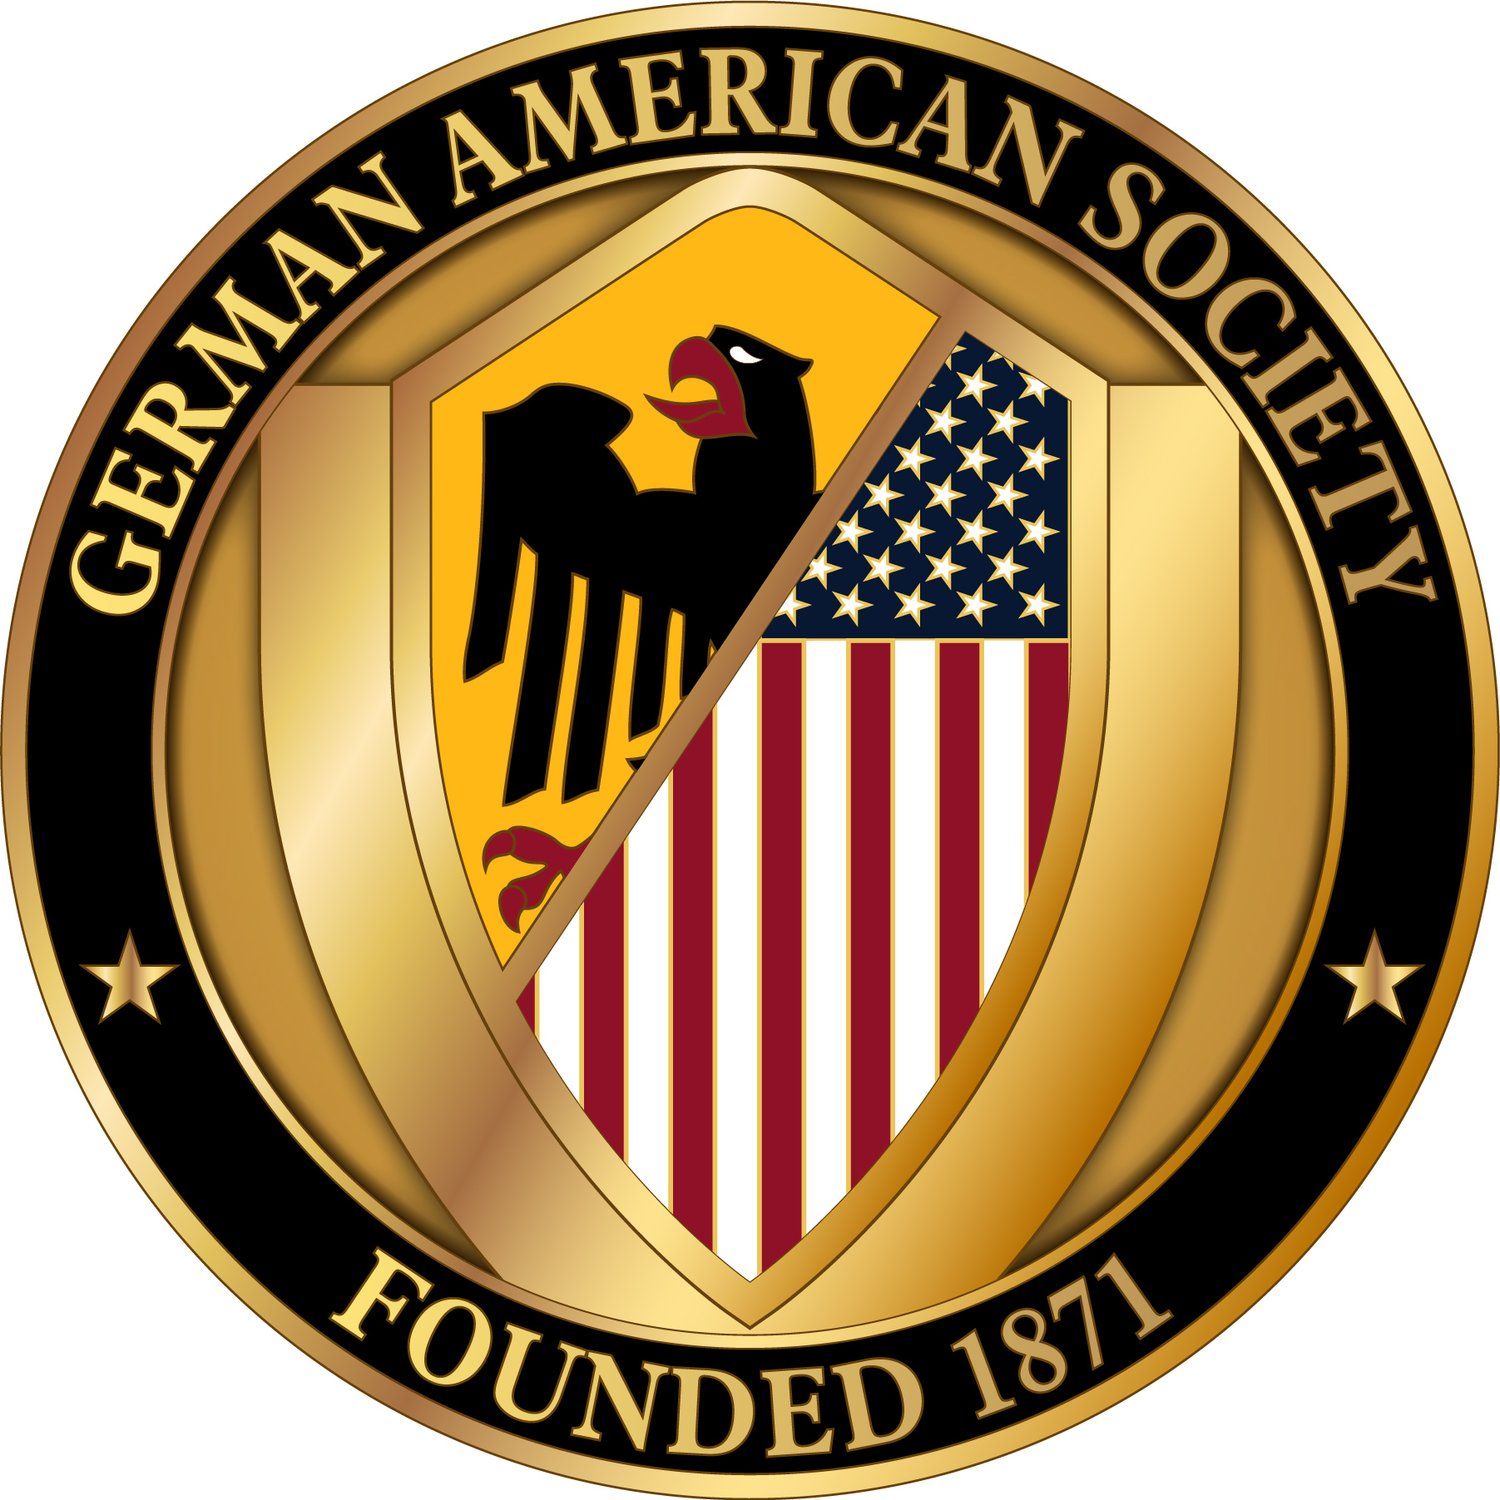 German Speaking Organization in USA - German American Society of Portland